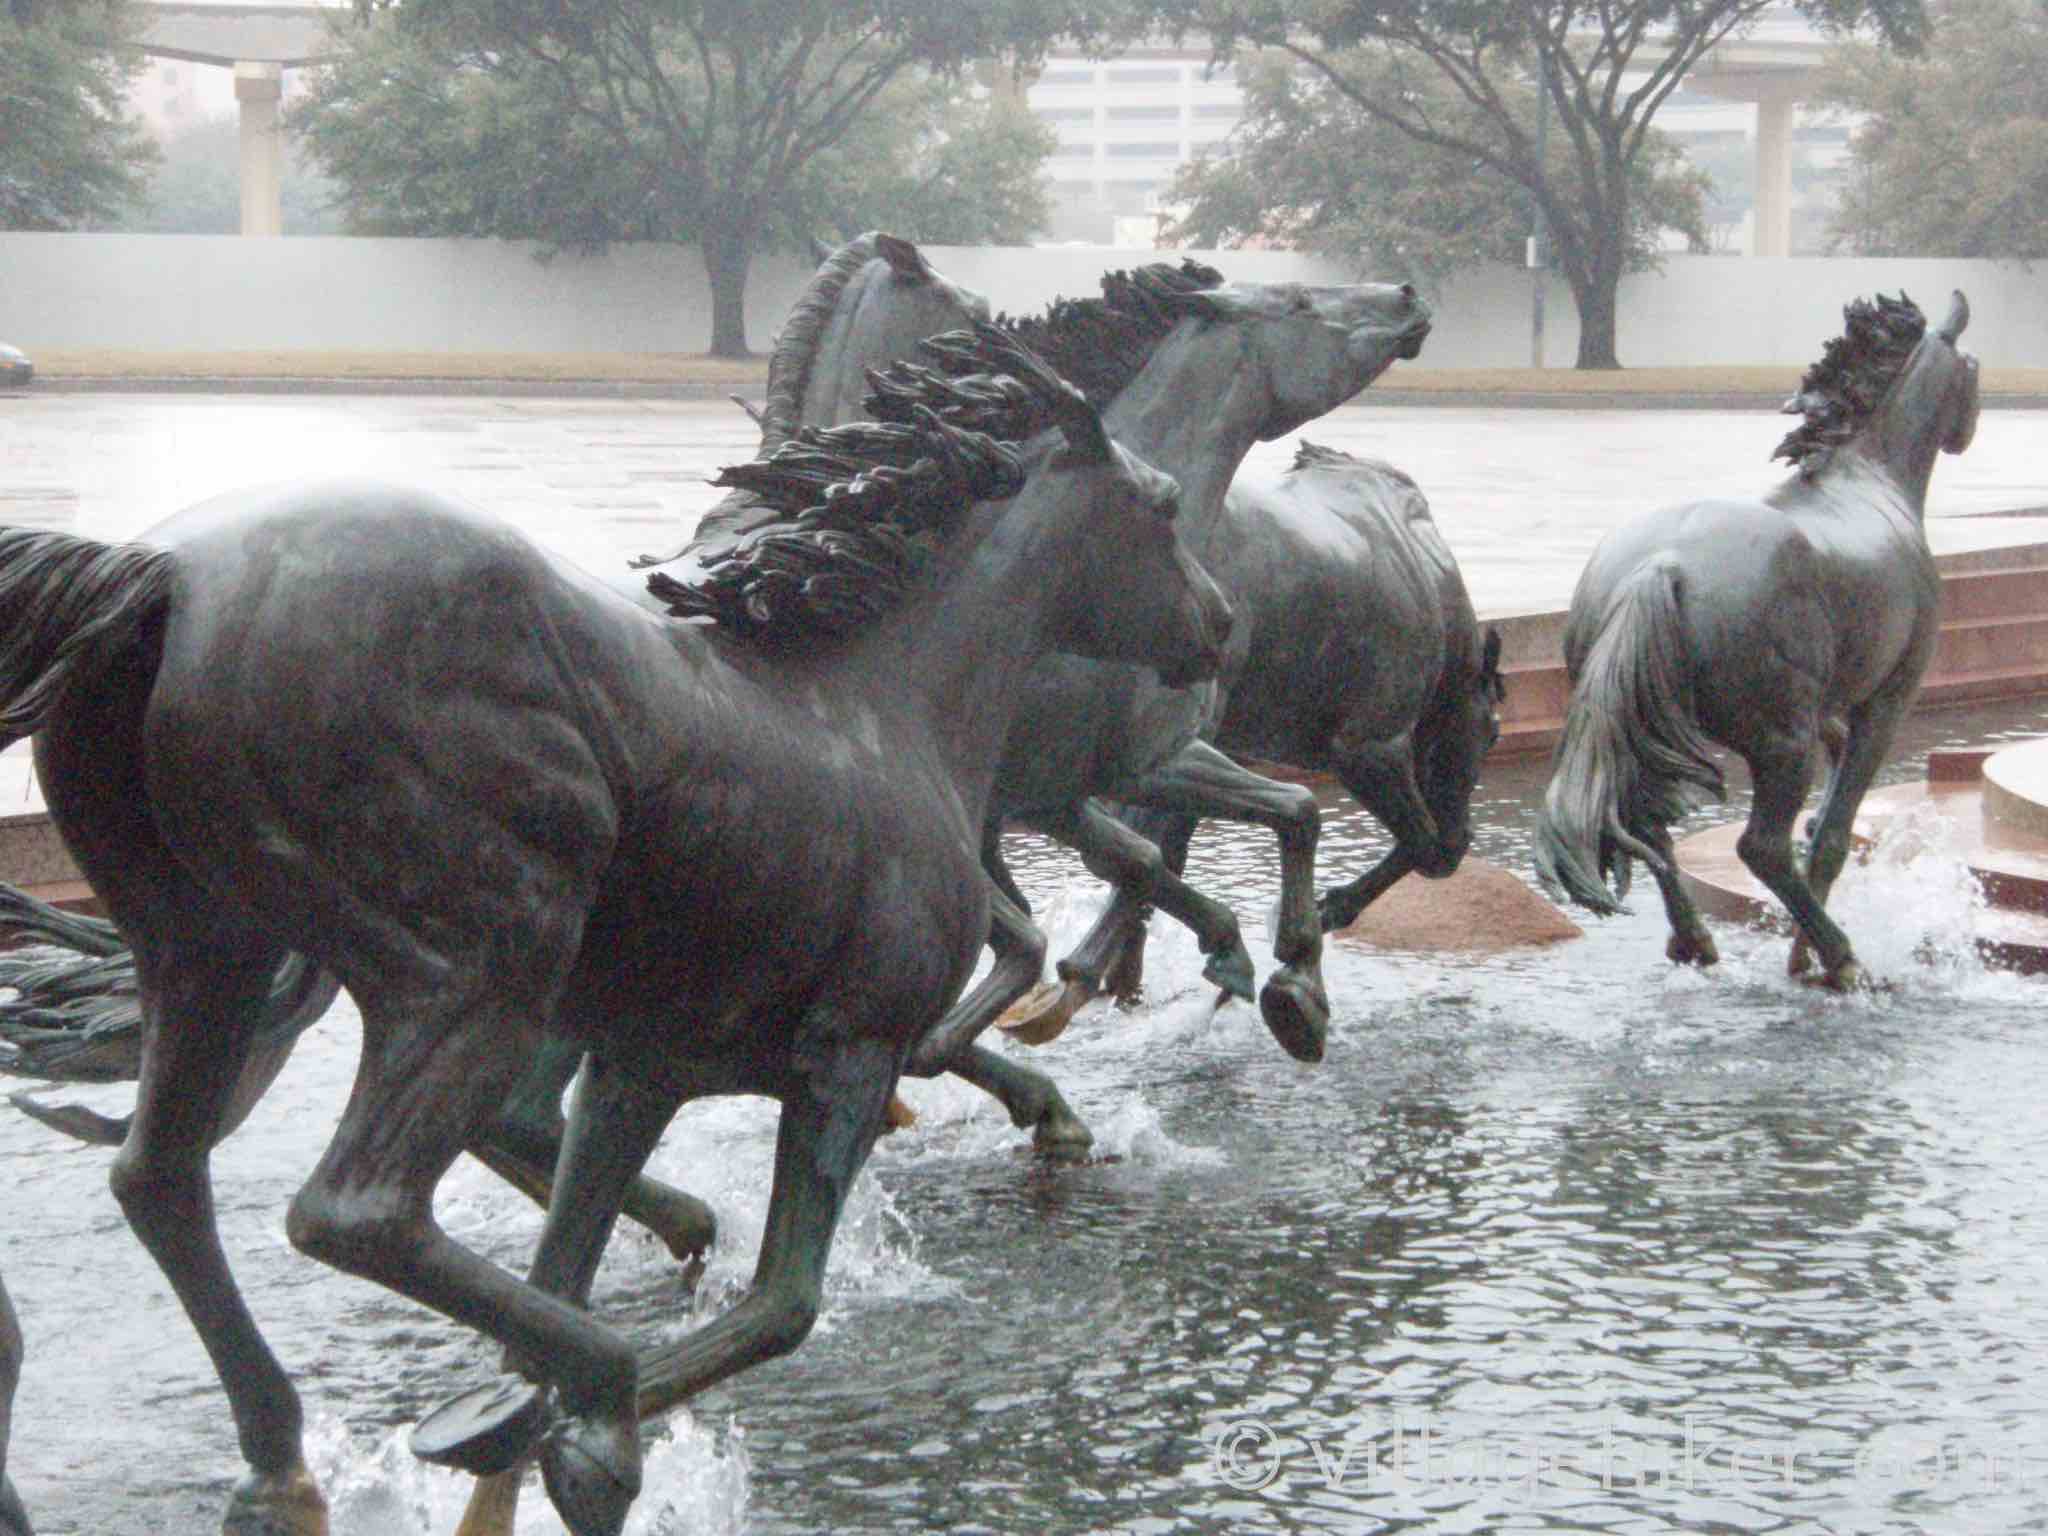 bronze mustangs splash through the fountain in a heavy rain.